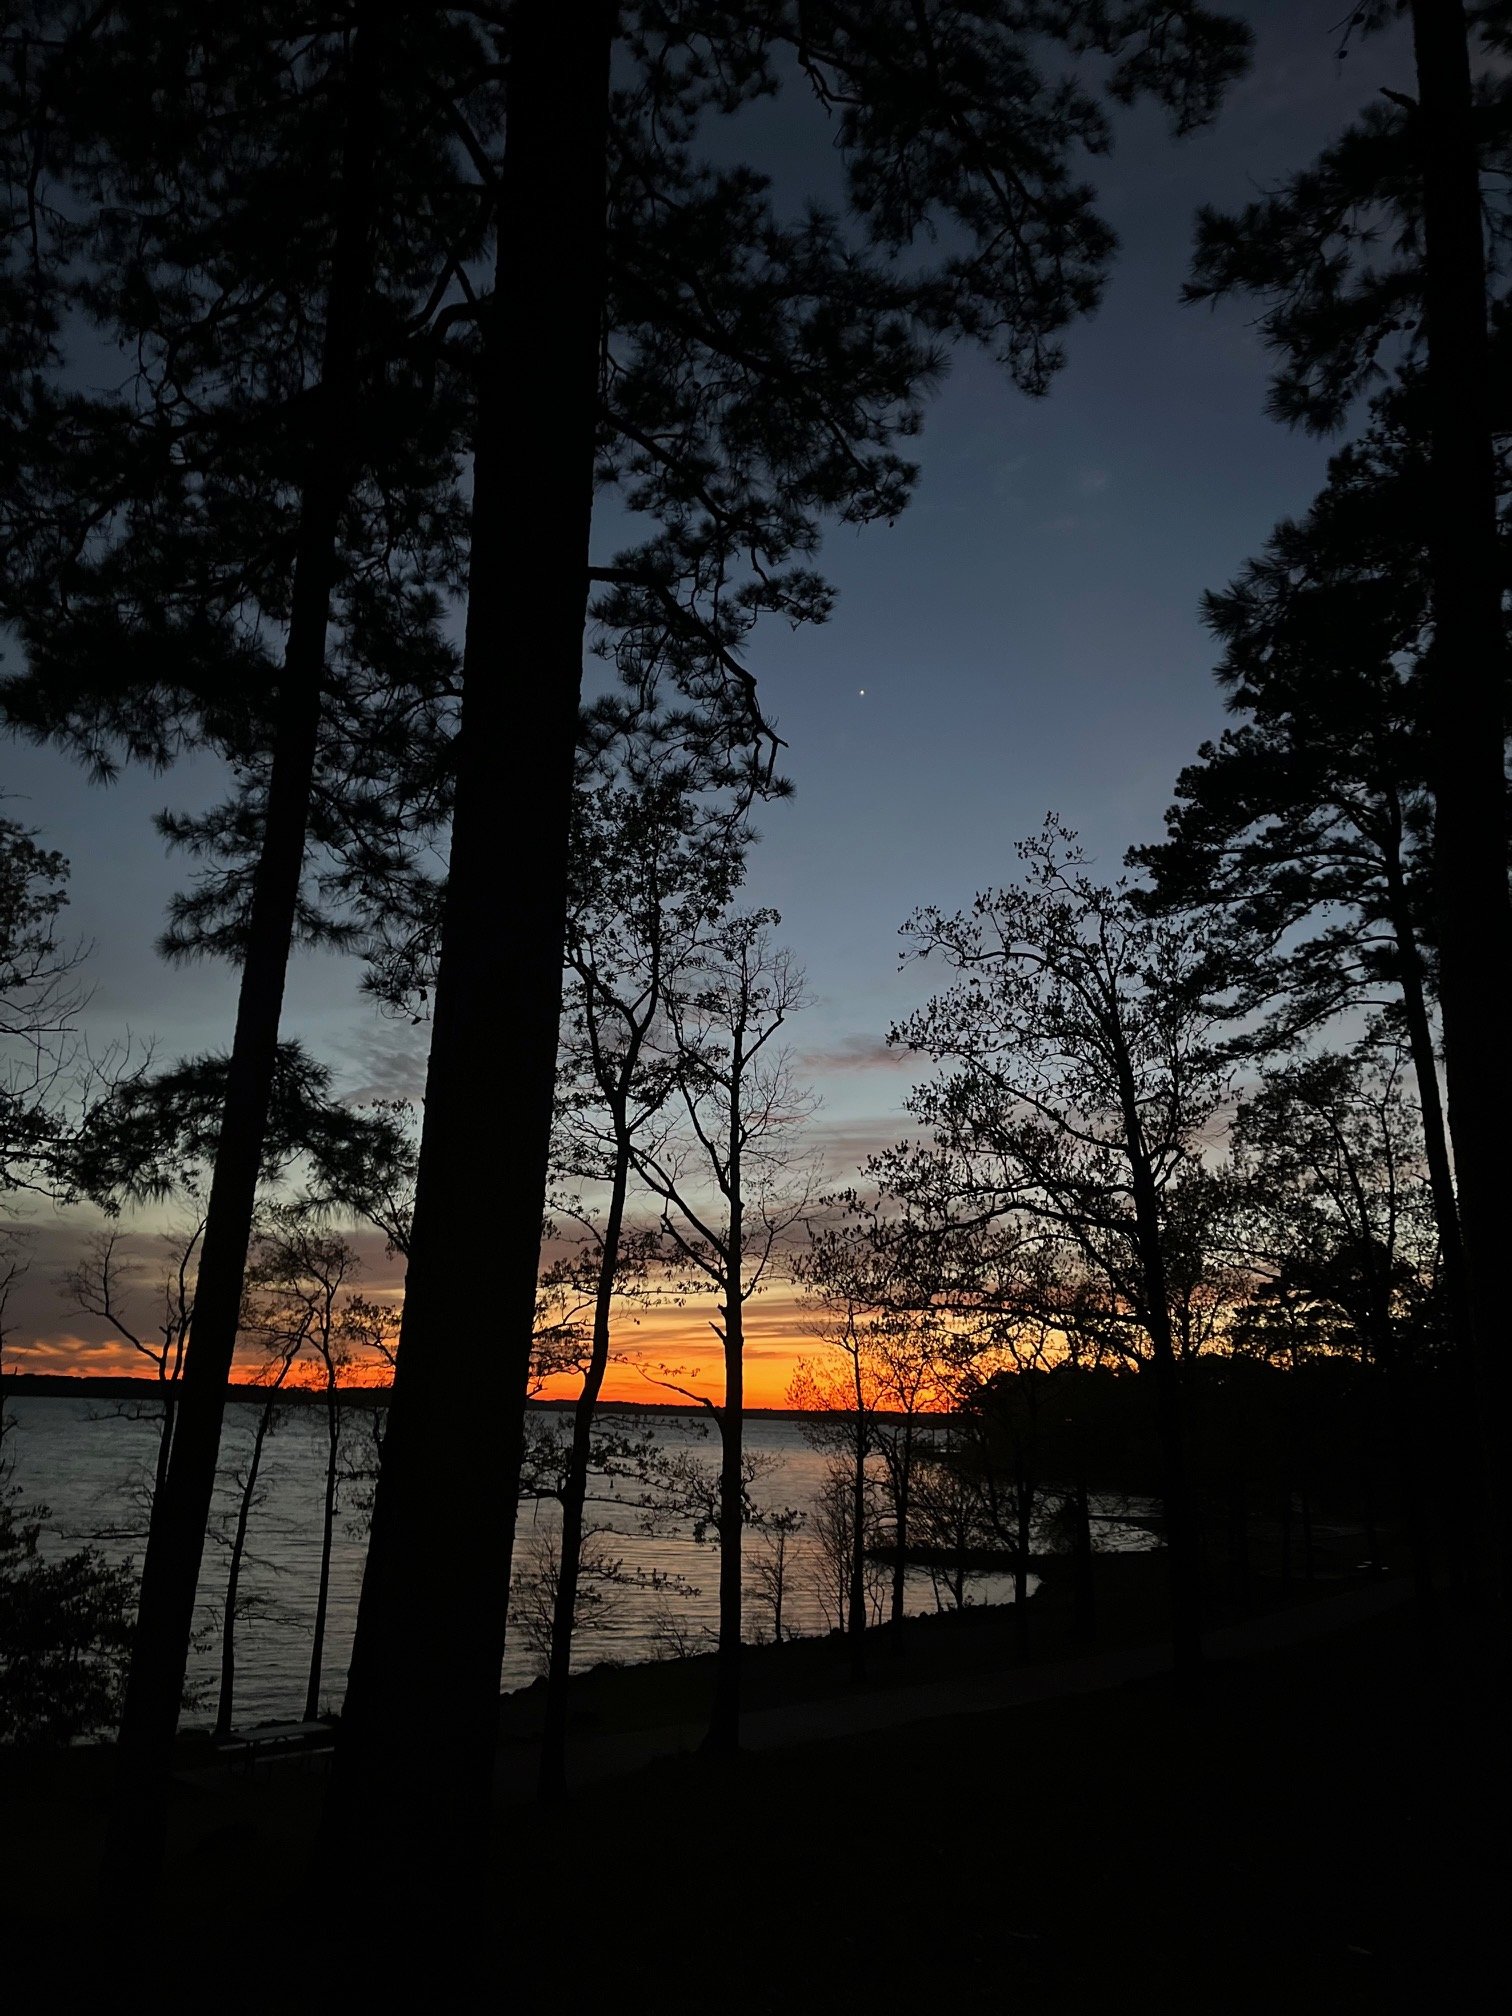  Lake O’ The Pines, Texas 